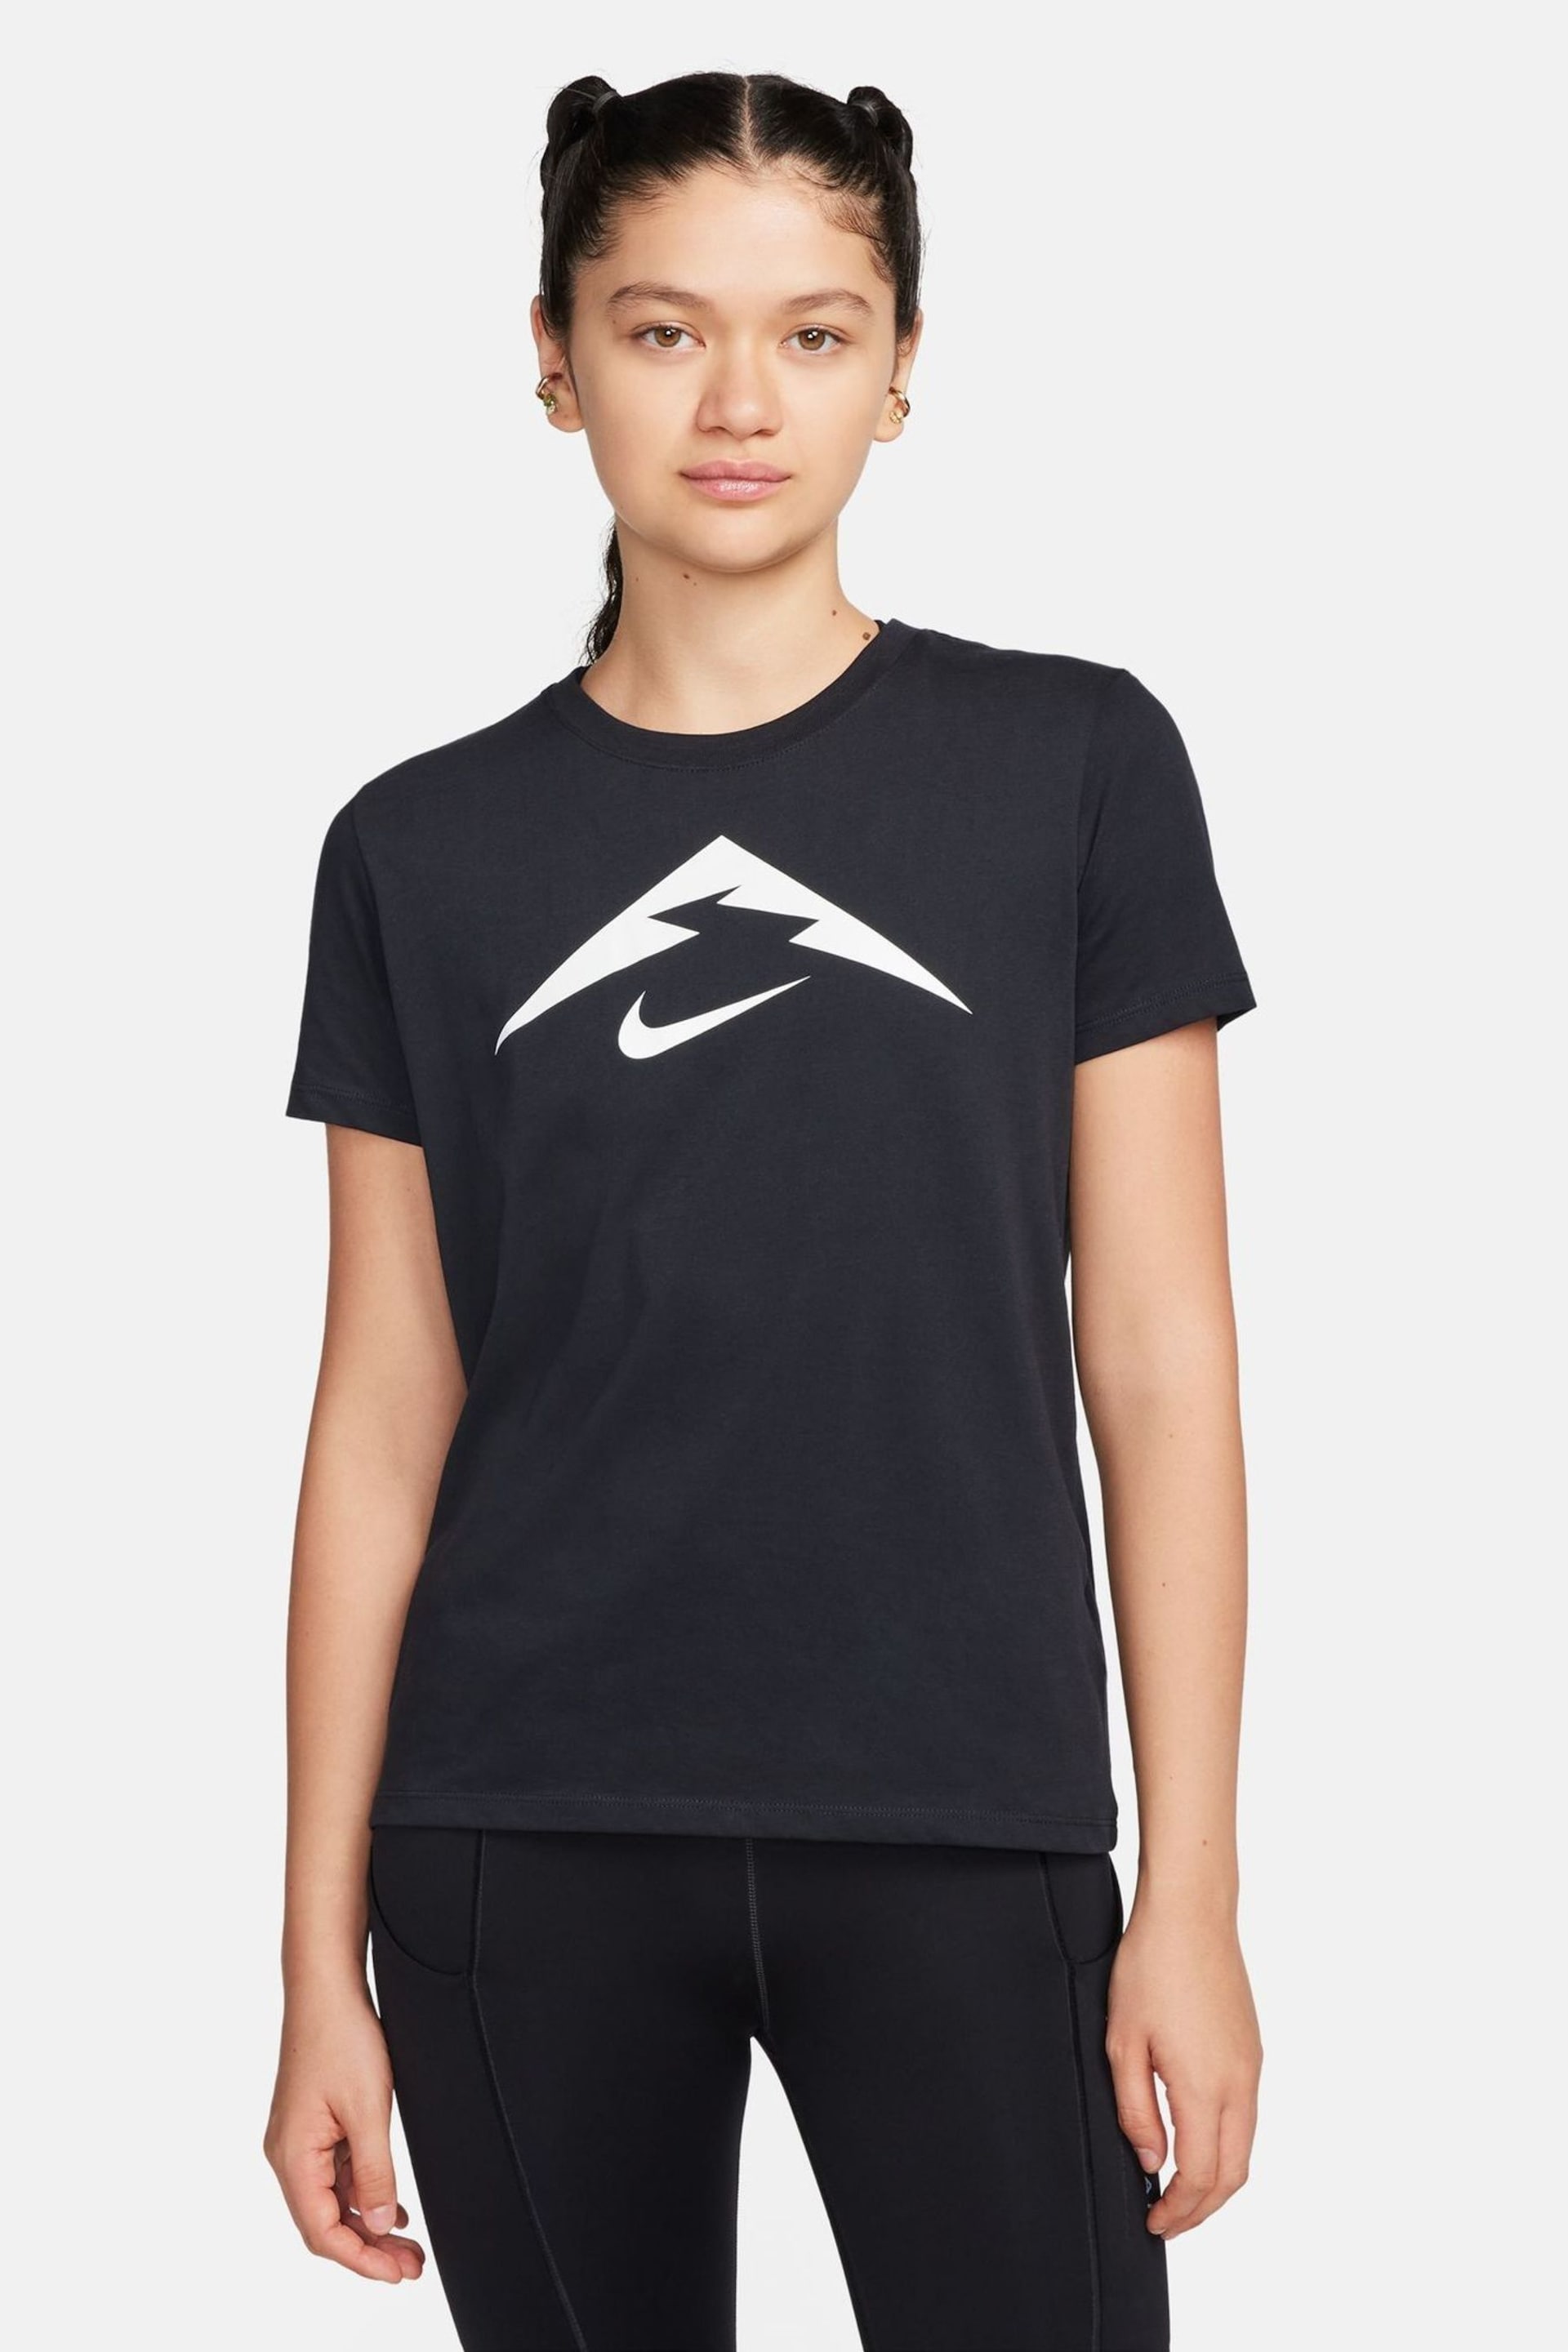 Nike Black Trail T-Shirt - Image 1 of 4